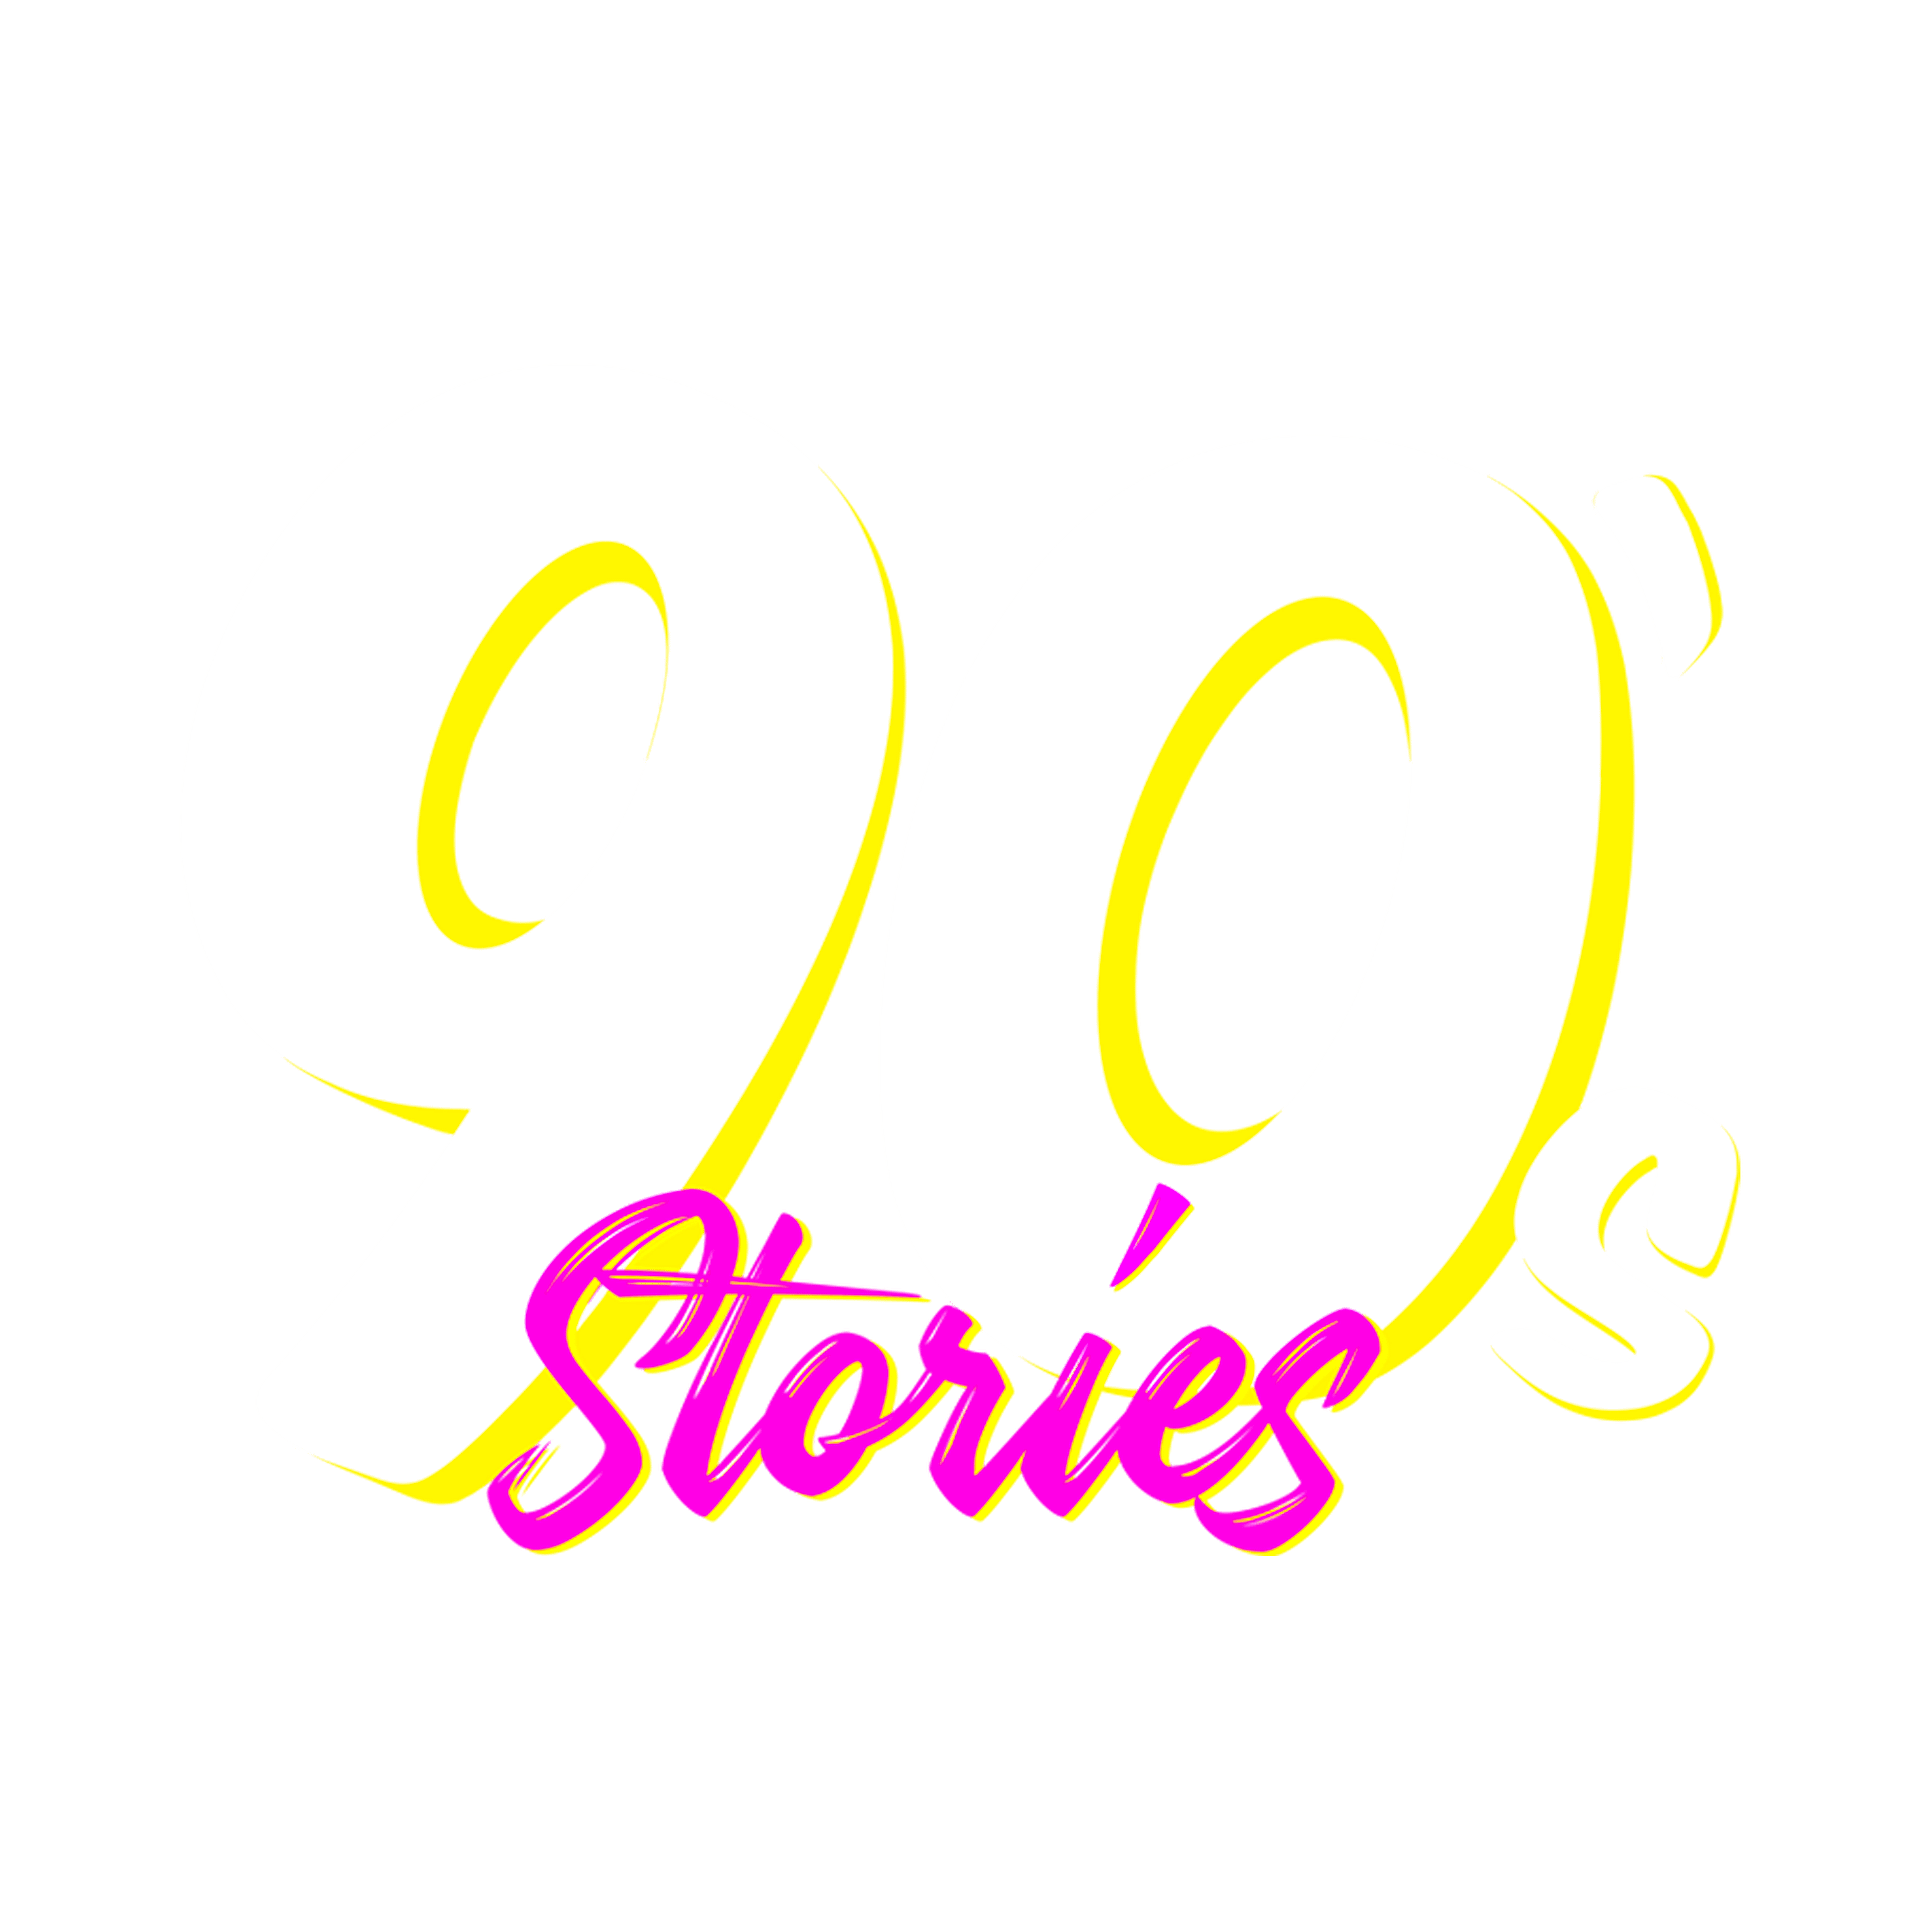 90 Stories